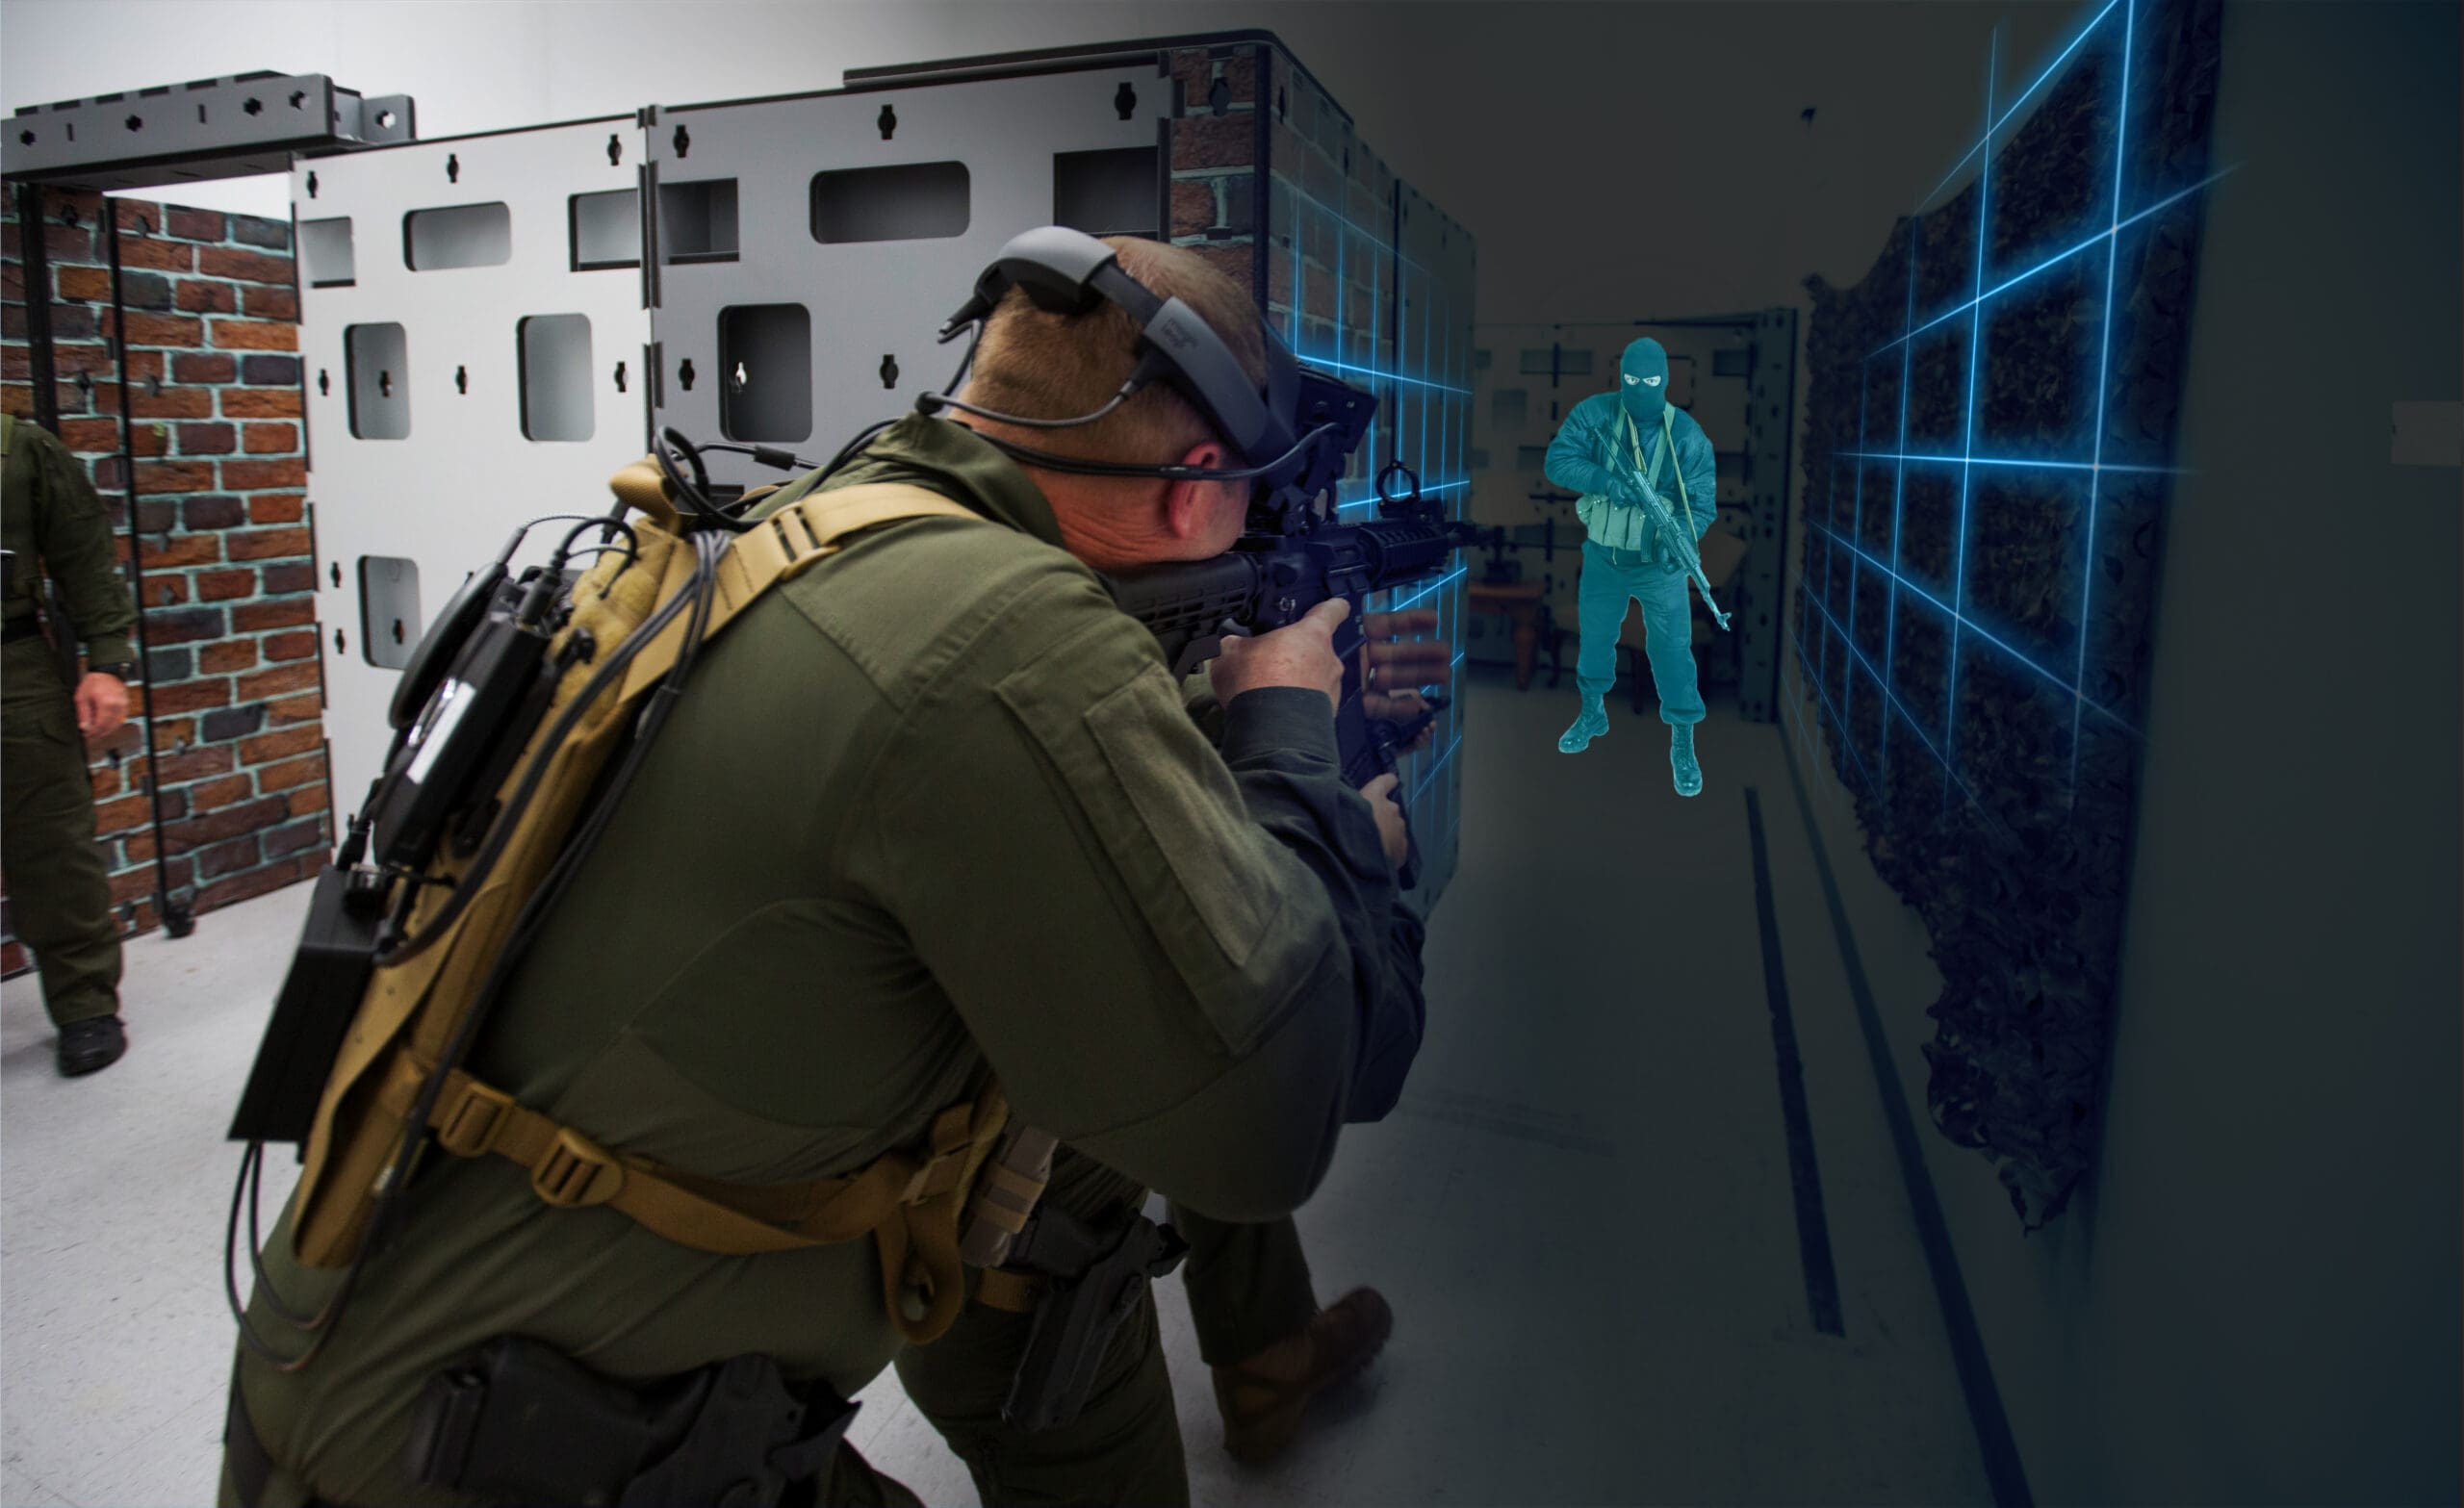 Inveris-training-resources-blog-modern-military-simulation-training